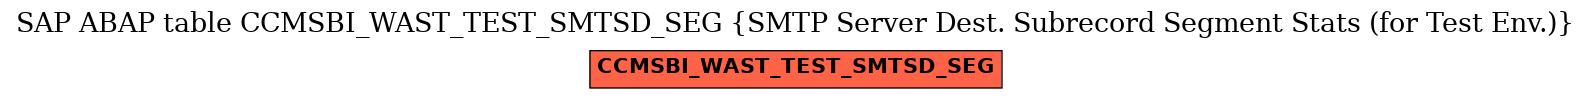 E-R Diagram for table CCMSBI_WAST_TEST_SMTSD_SEG (SMTP Server Dest. Subrecord Segment Stats (for Test Env.))